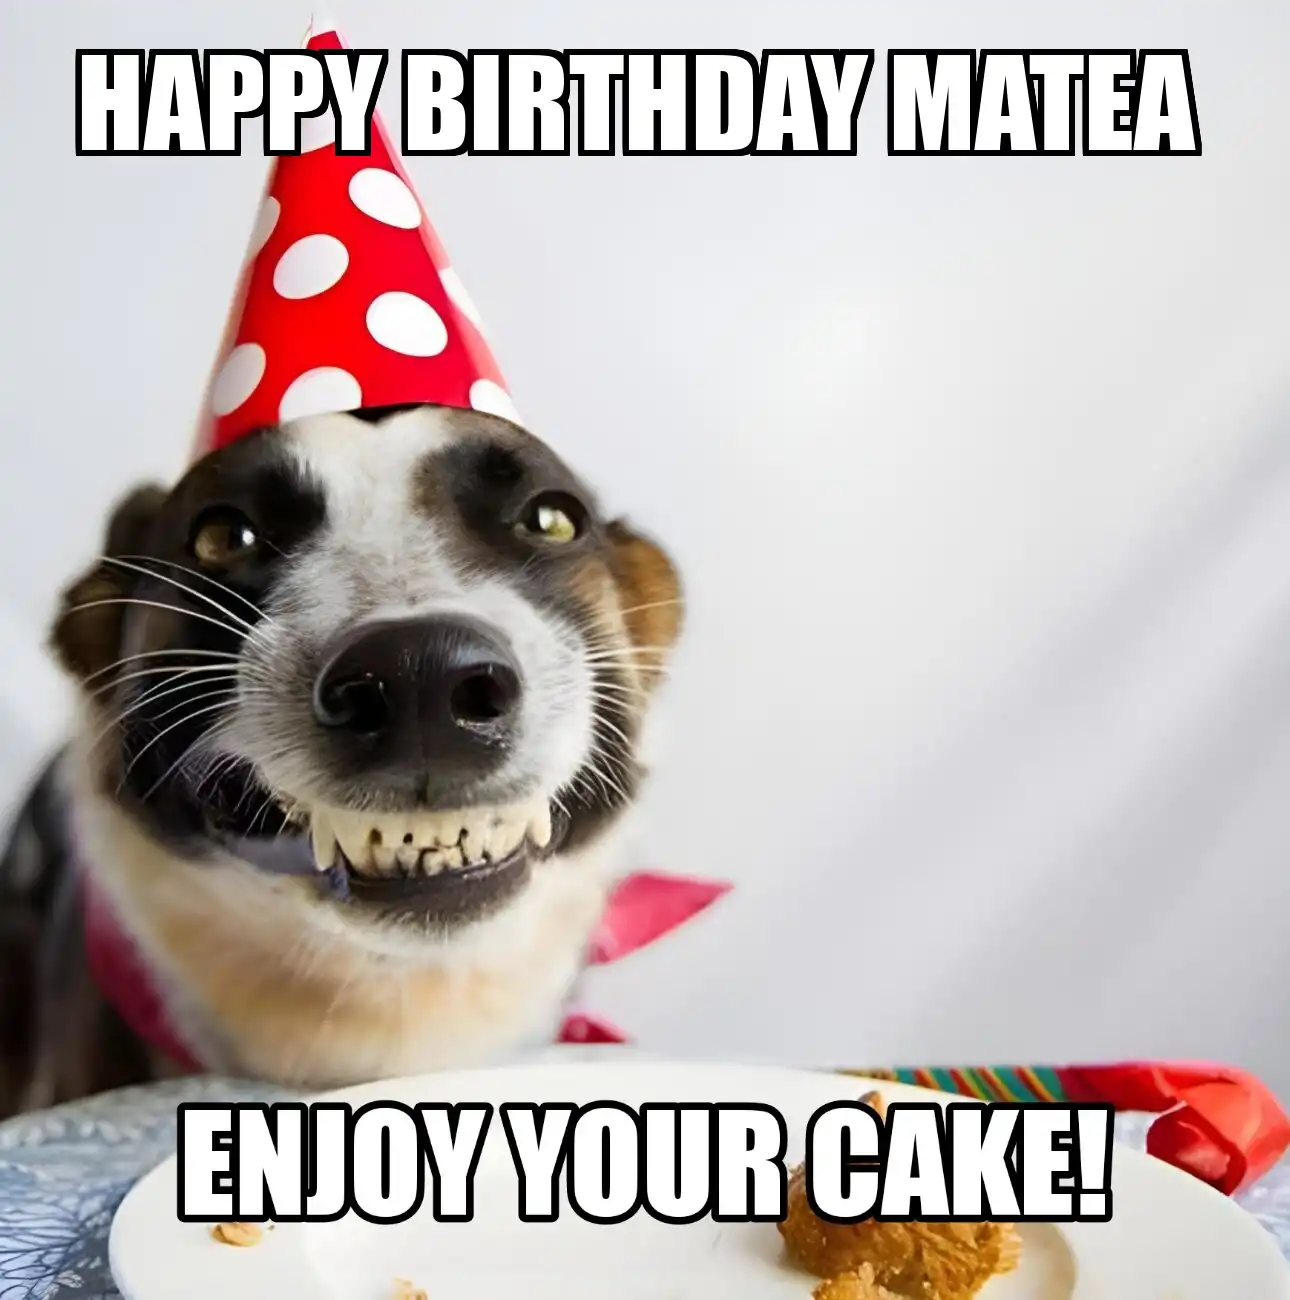 Happy Birthday Matea Enjoy Your Cake Dog Meme